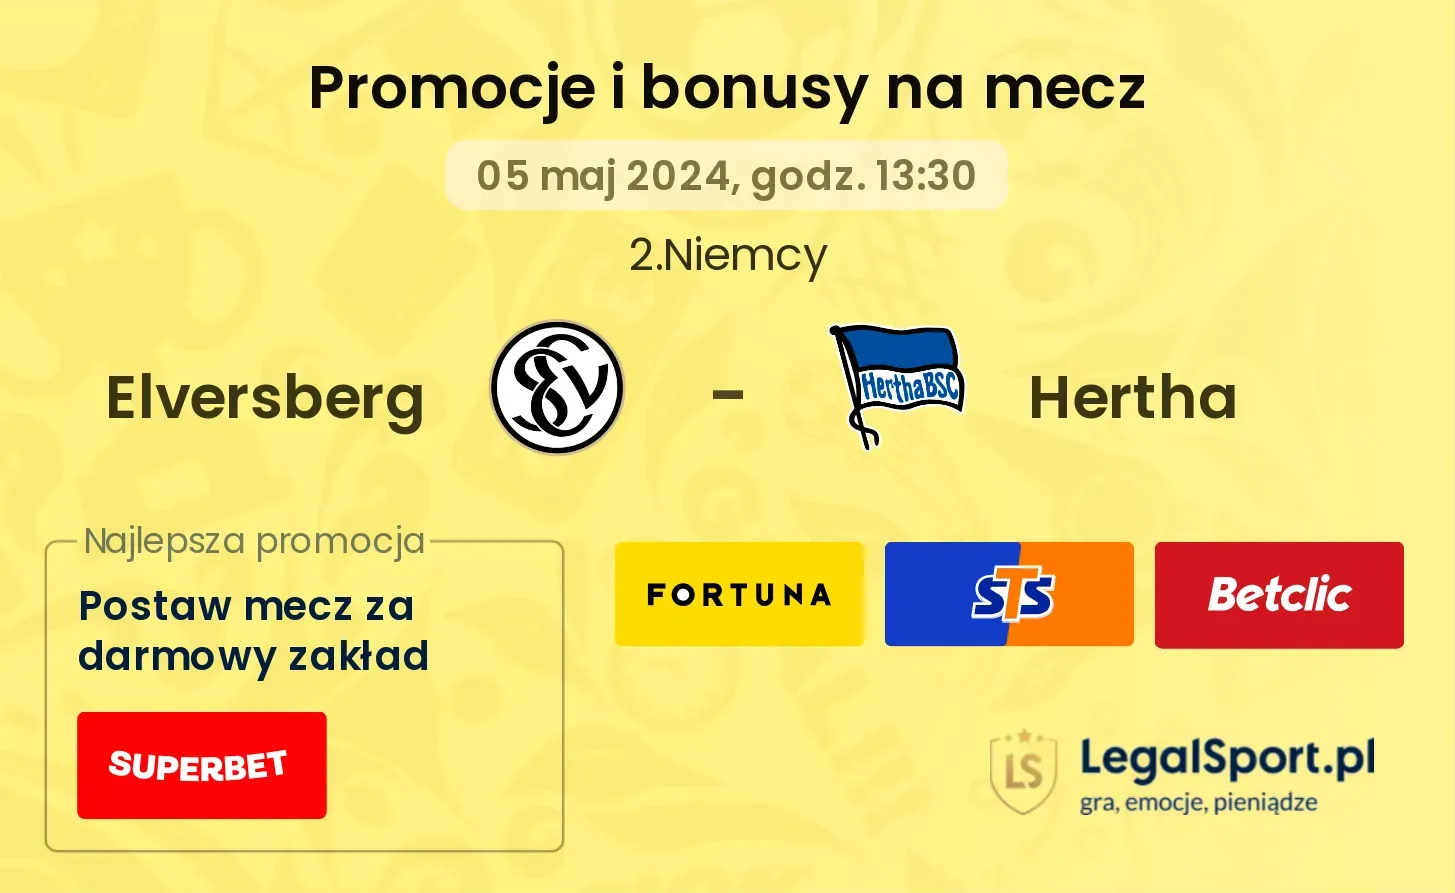 Elversberg - Hertha promocje bonusy na mecz